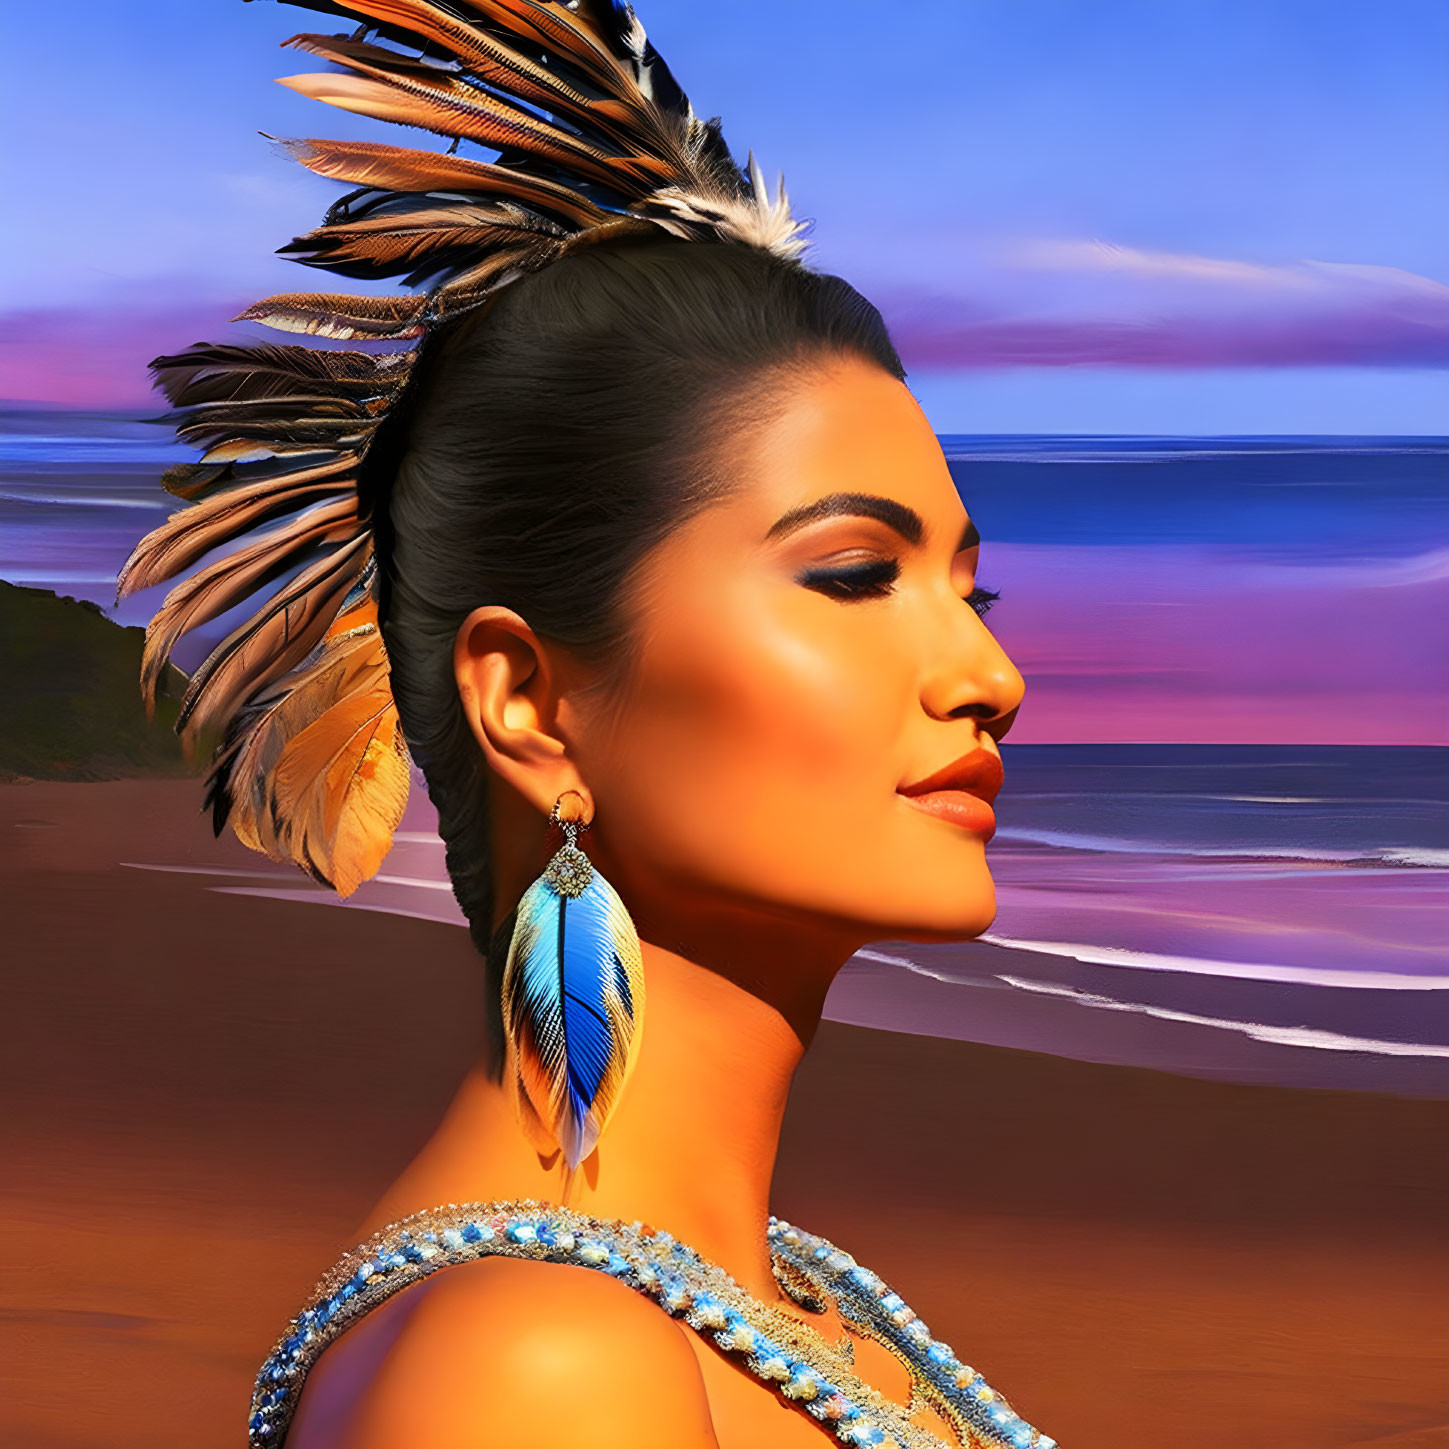 Digital Artwork: Woman in Feather Headdress, Blue Top, Earring, Beach Sunset